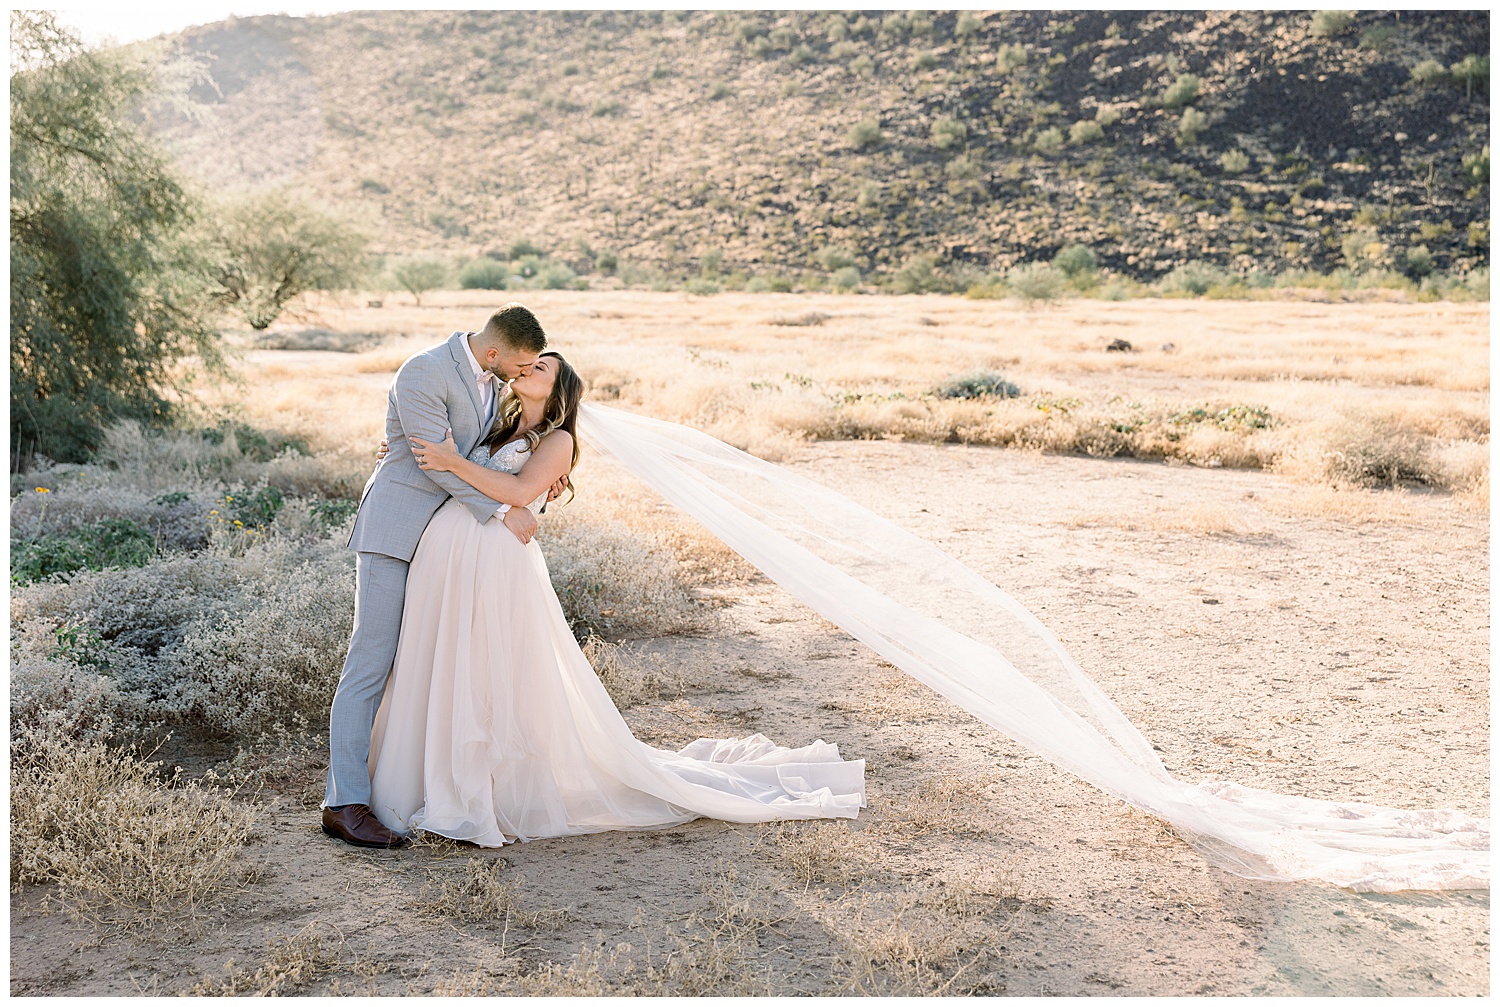 Intimate Estate Wedding Portraits in the desert, Arizona